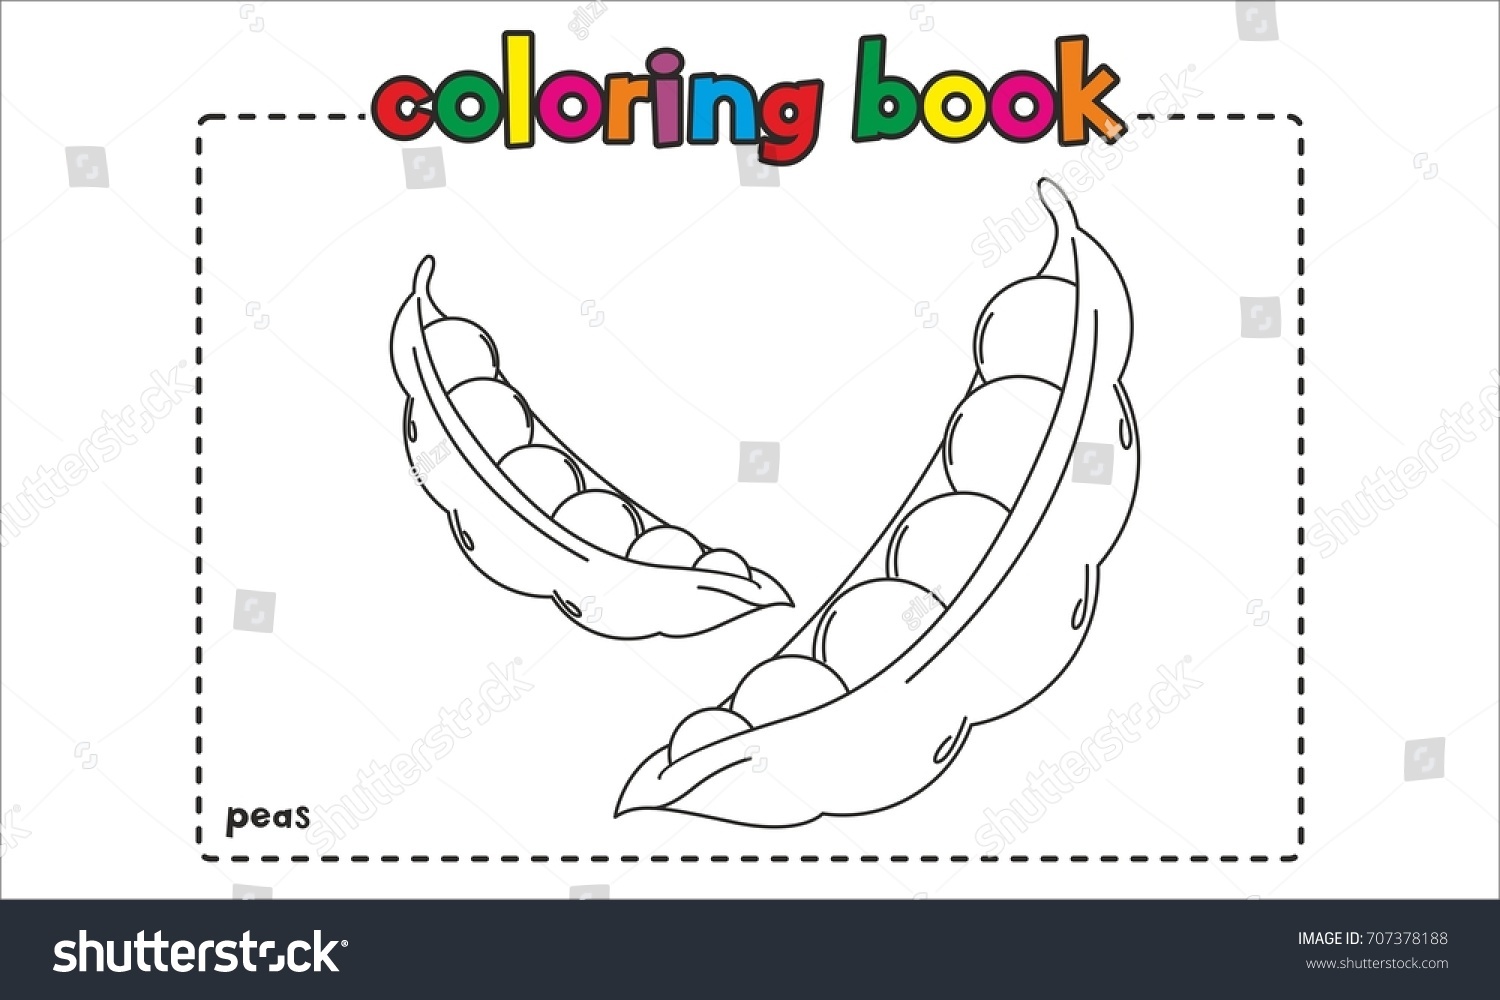 Peas coloring book kids children stock vector royalty free